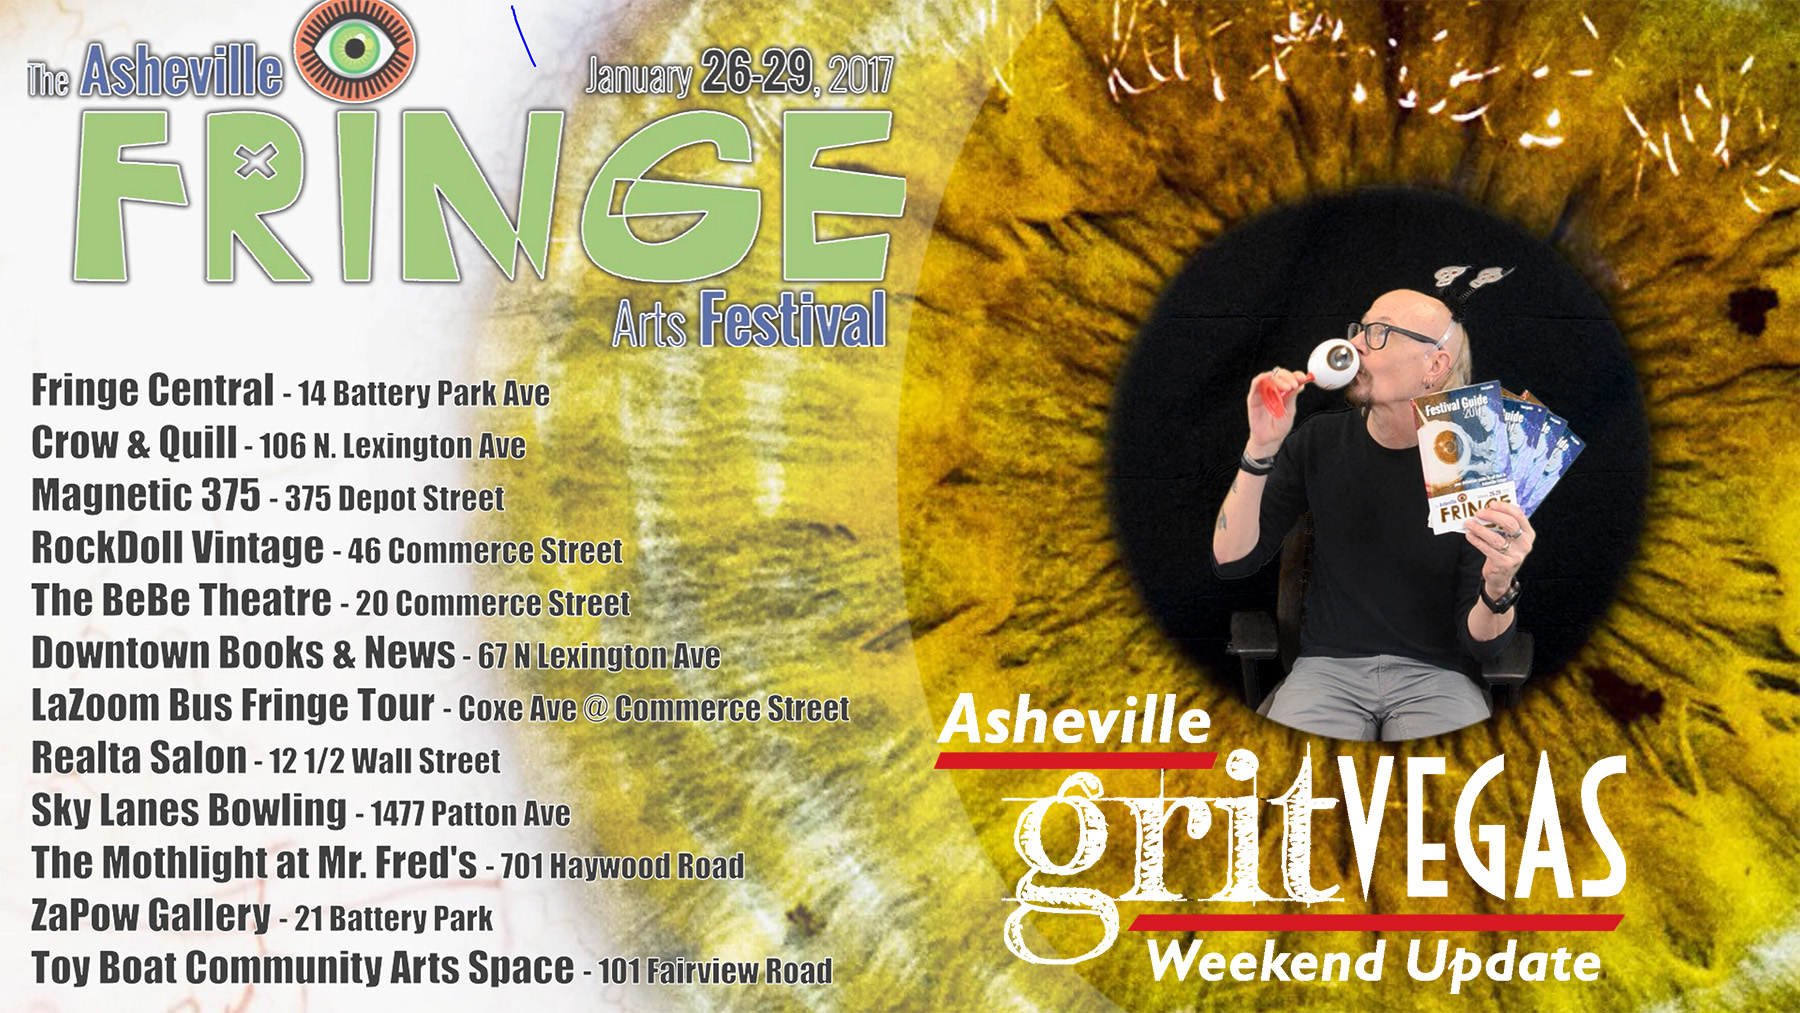 Fringe Fest Weekend Update